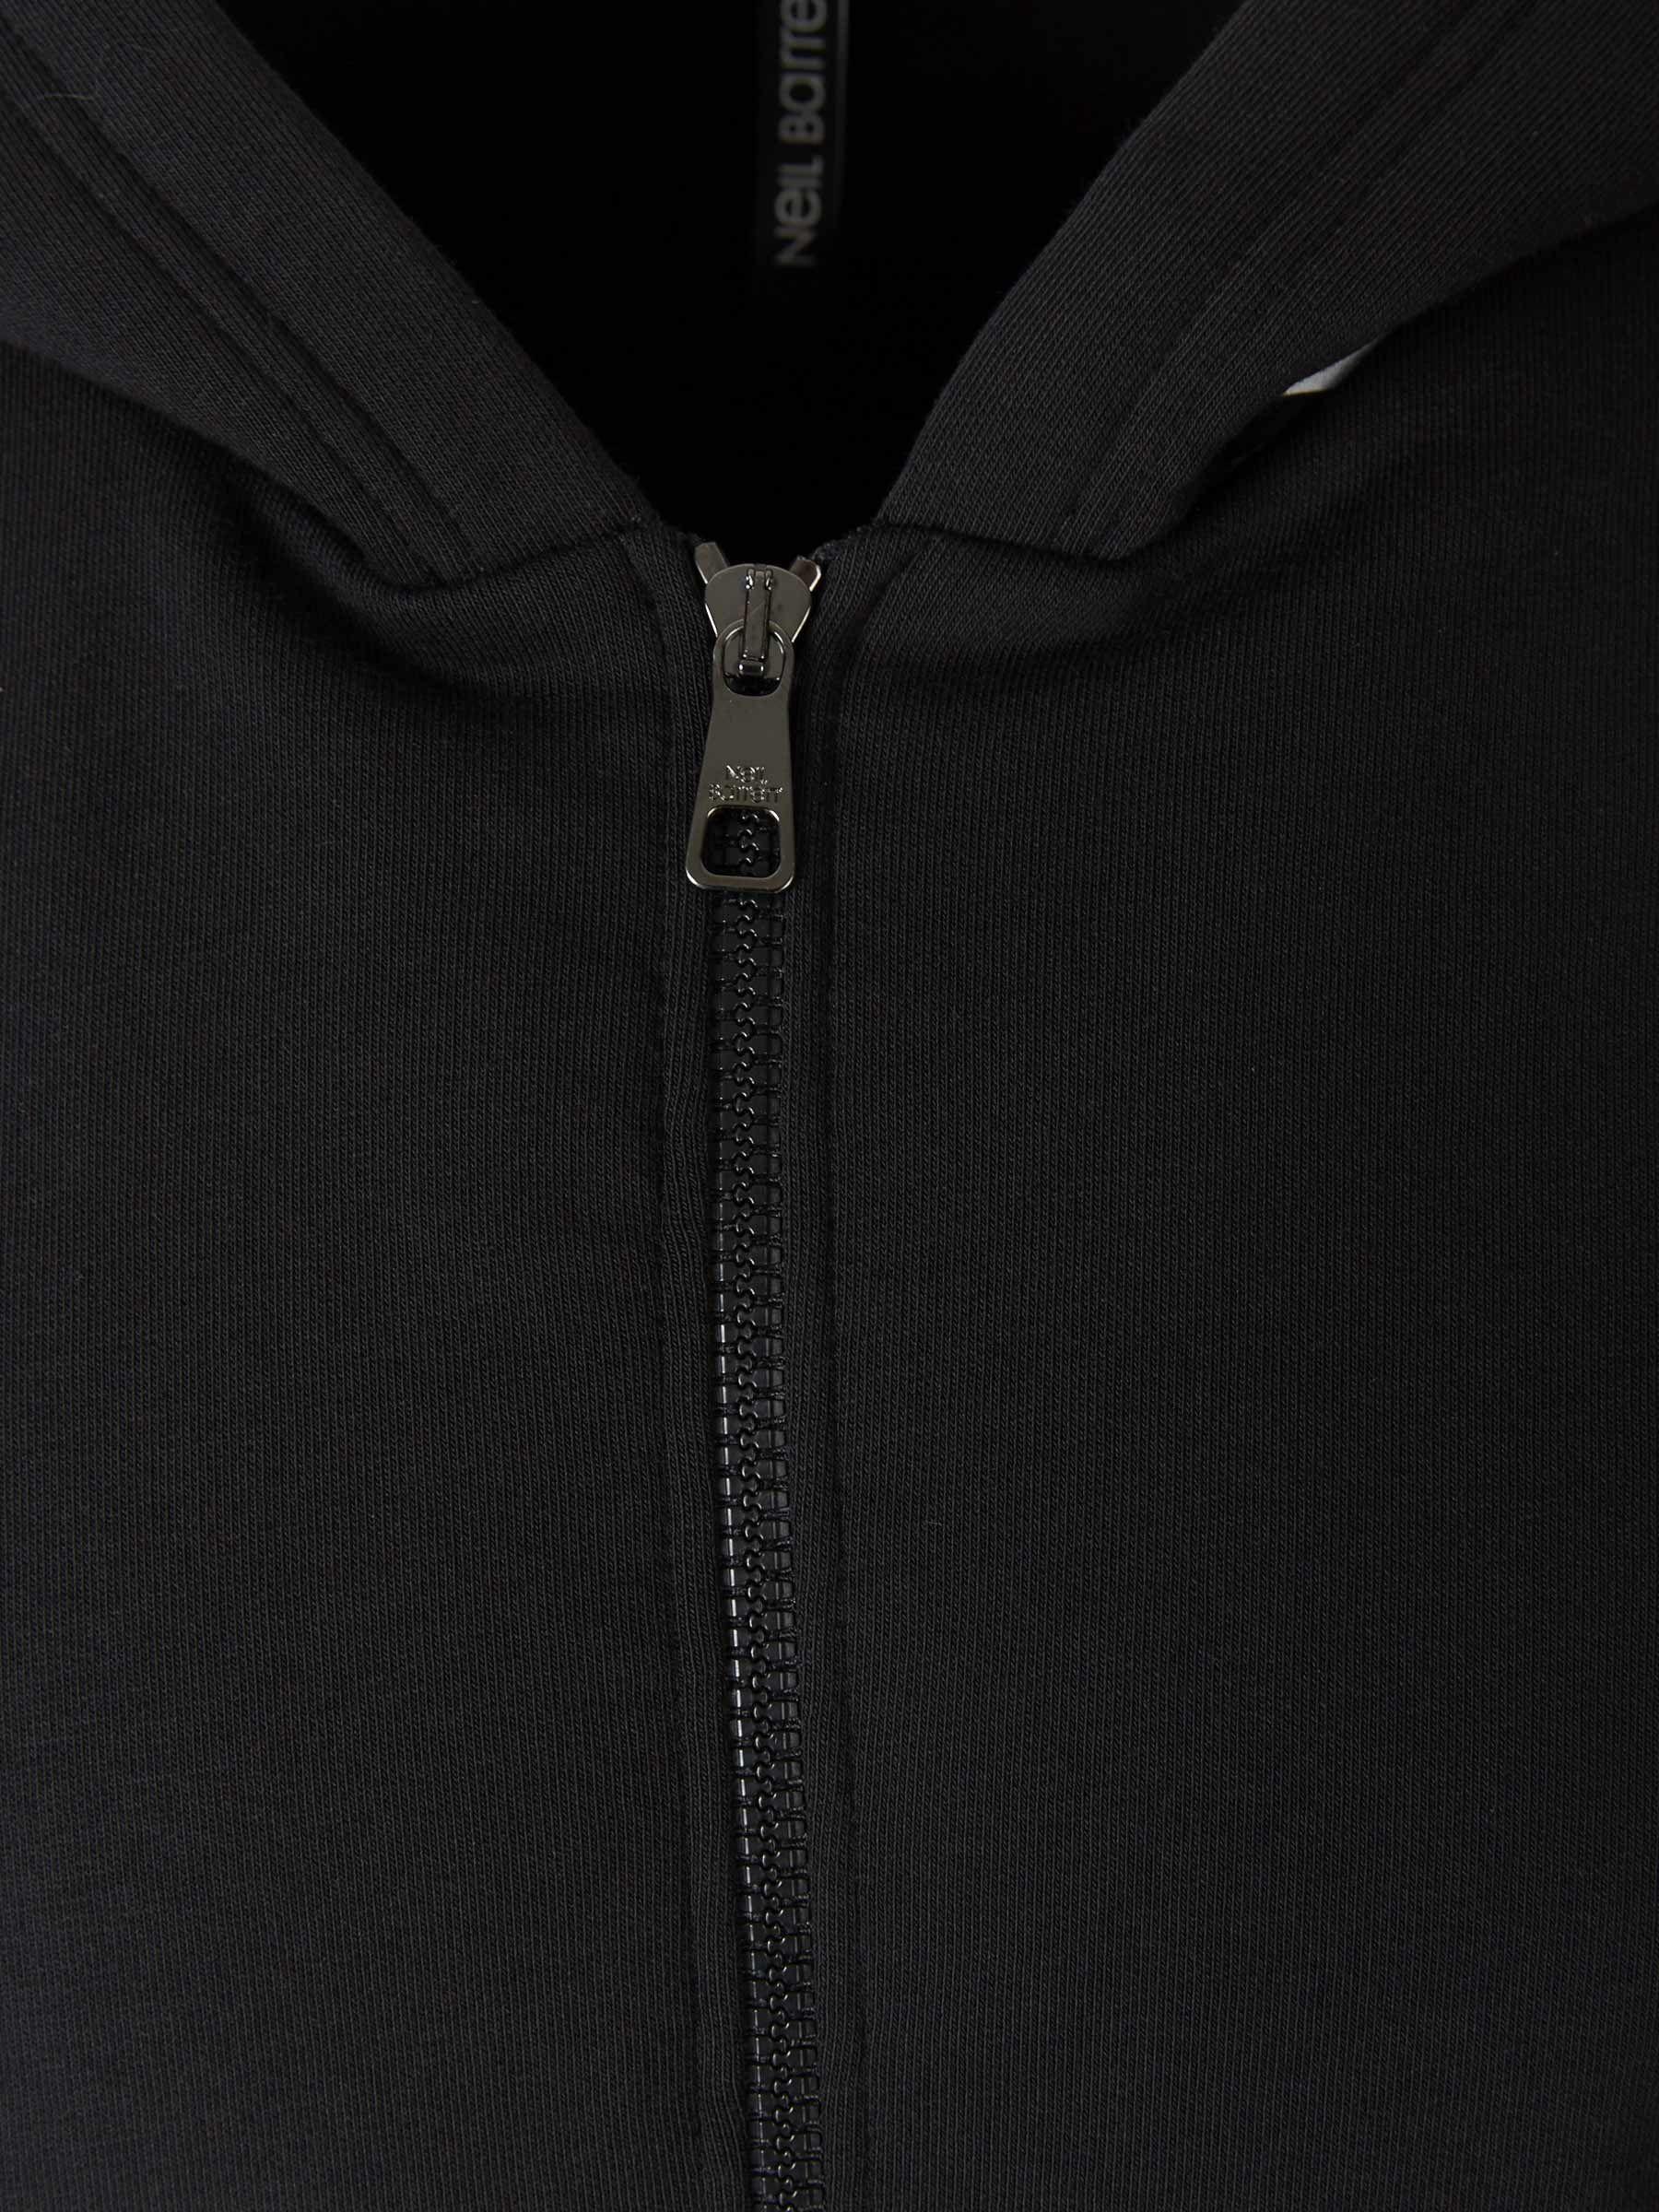 Neil Barrett Cotton Lightning Bolt Zip Hoodie in Black for Men - Save 25% -  Lyst